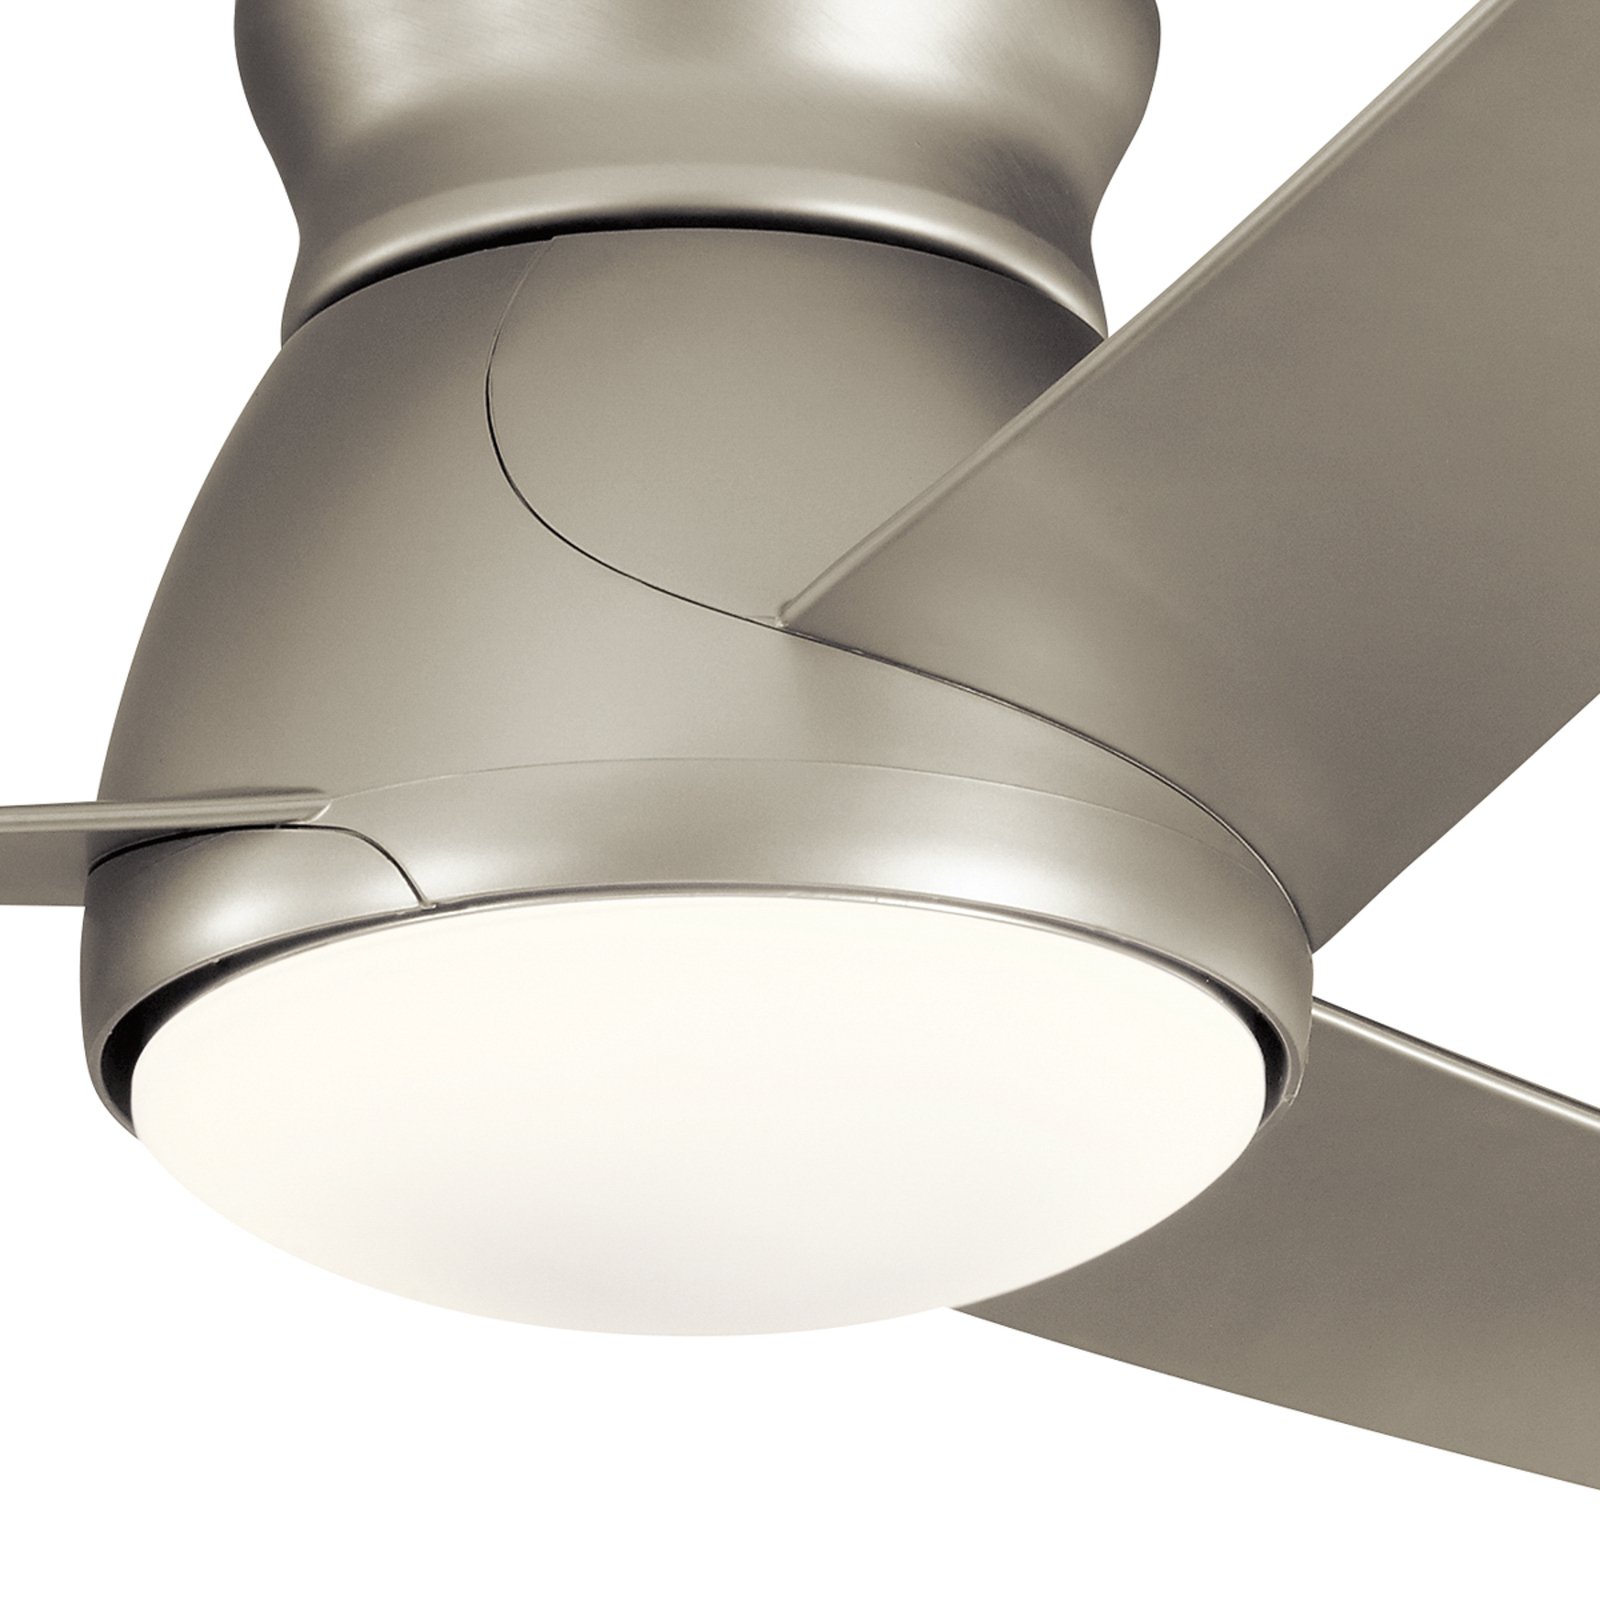 Eris LED ceiling fan, IP44, brushed nickel